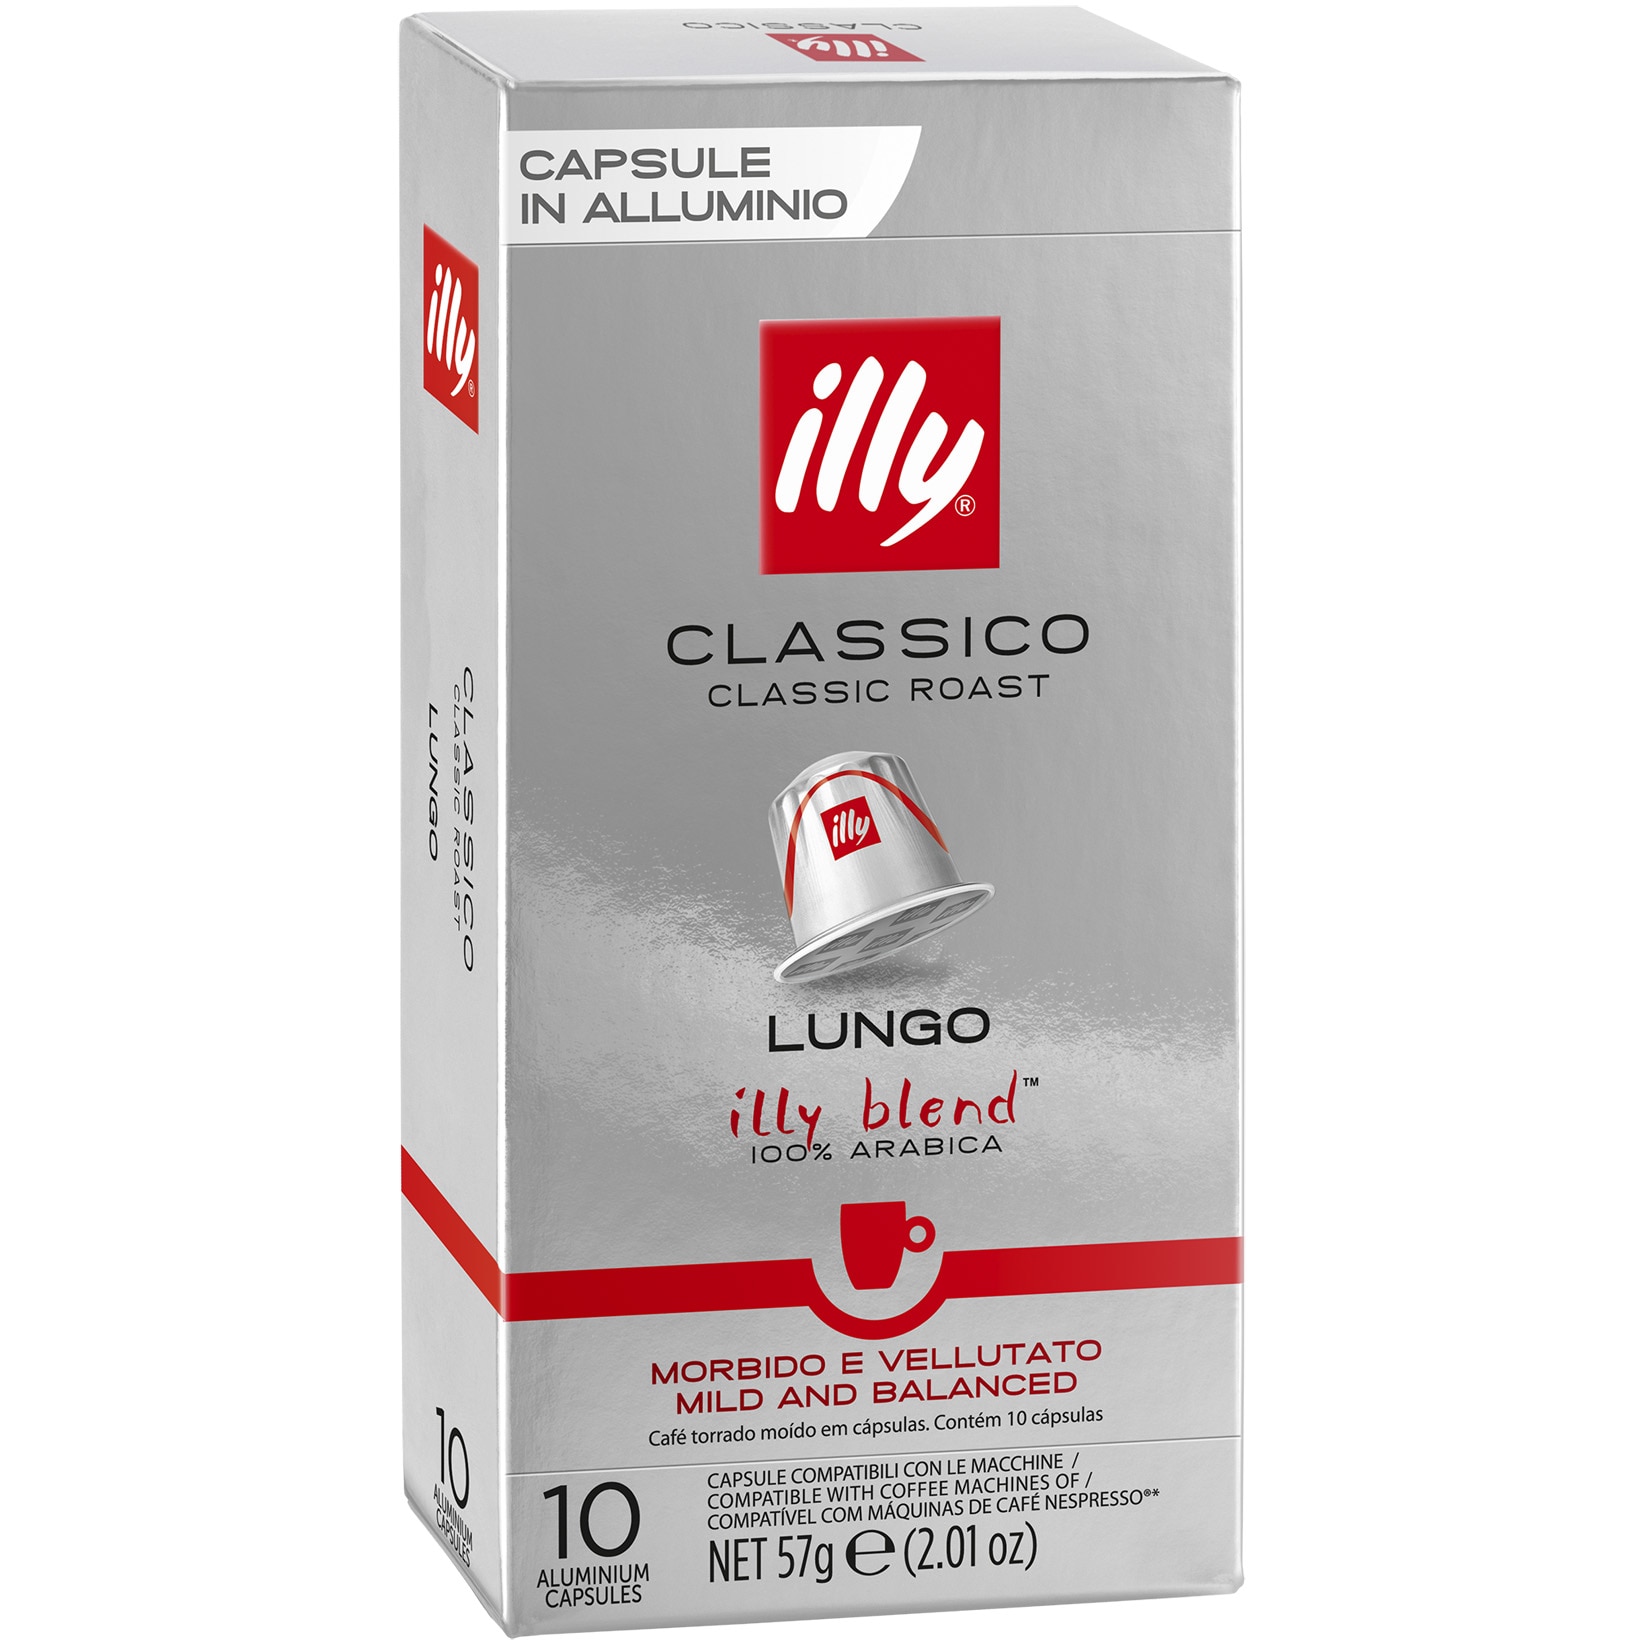 Capsule cafea Illy Classico Lungo, intensitate 5, 10 bauturi x 100 ml,  compatibile cu sistemul Nespresso®, 10 capsule aluminiu 